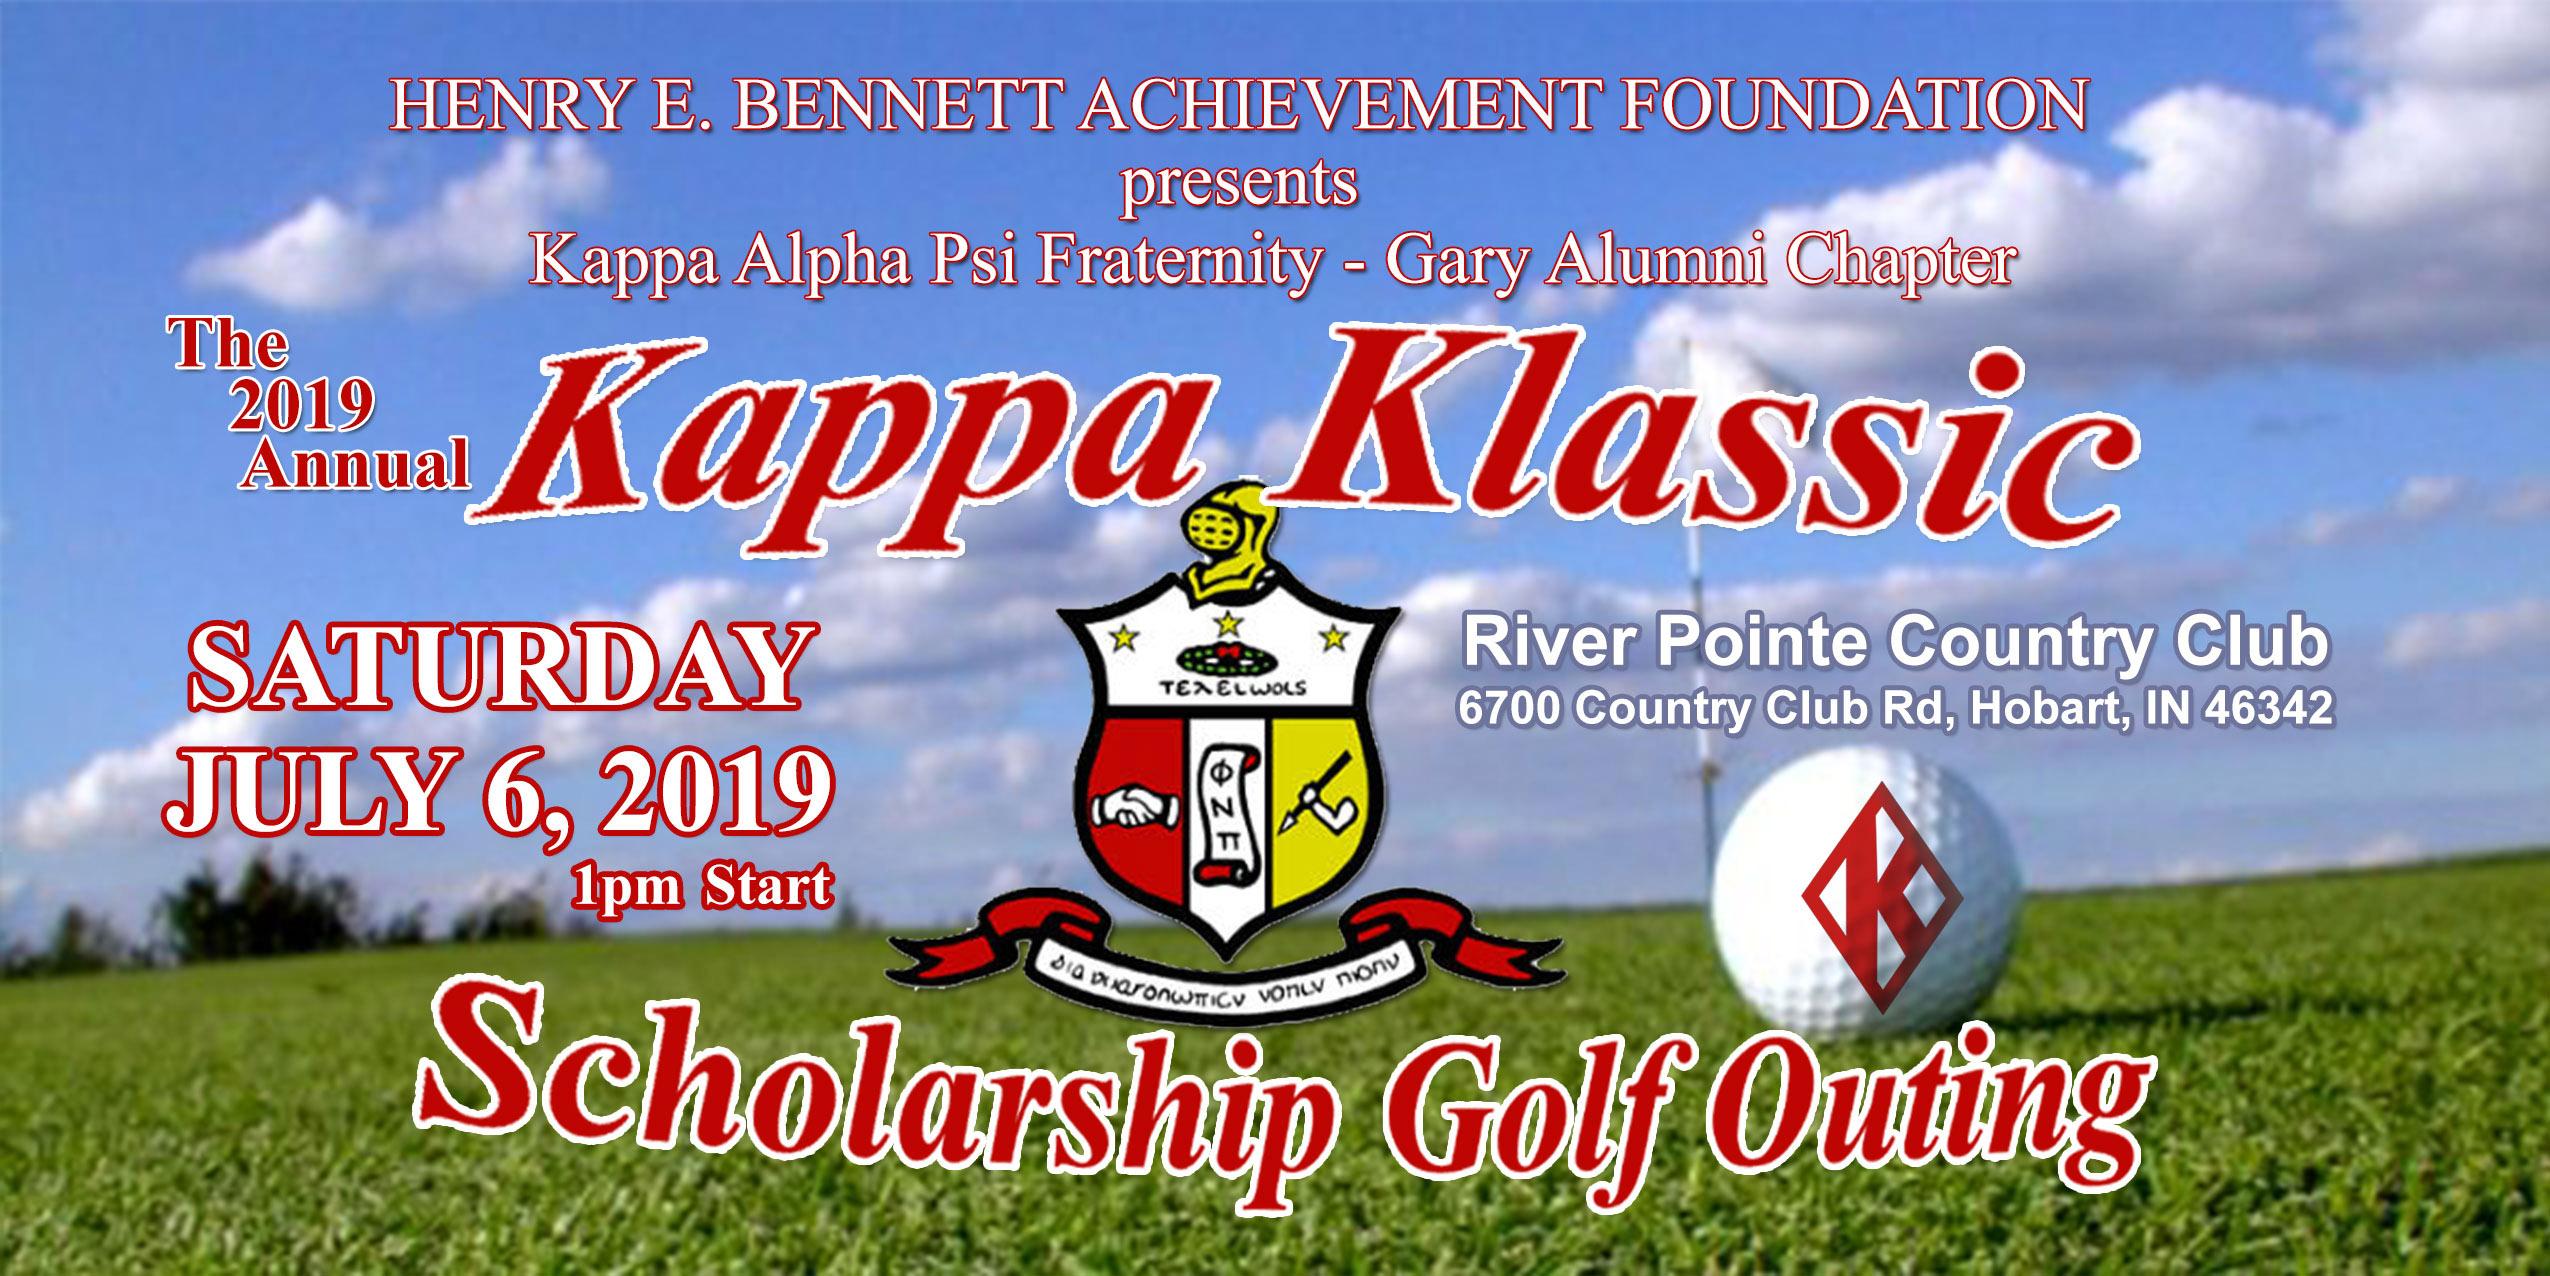 2019 Annual Kappa Klassic - Scholarship Golf Outing